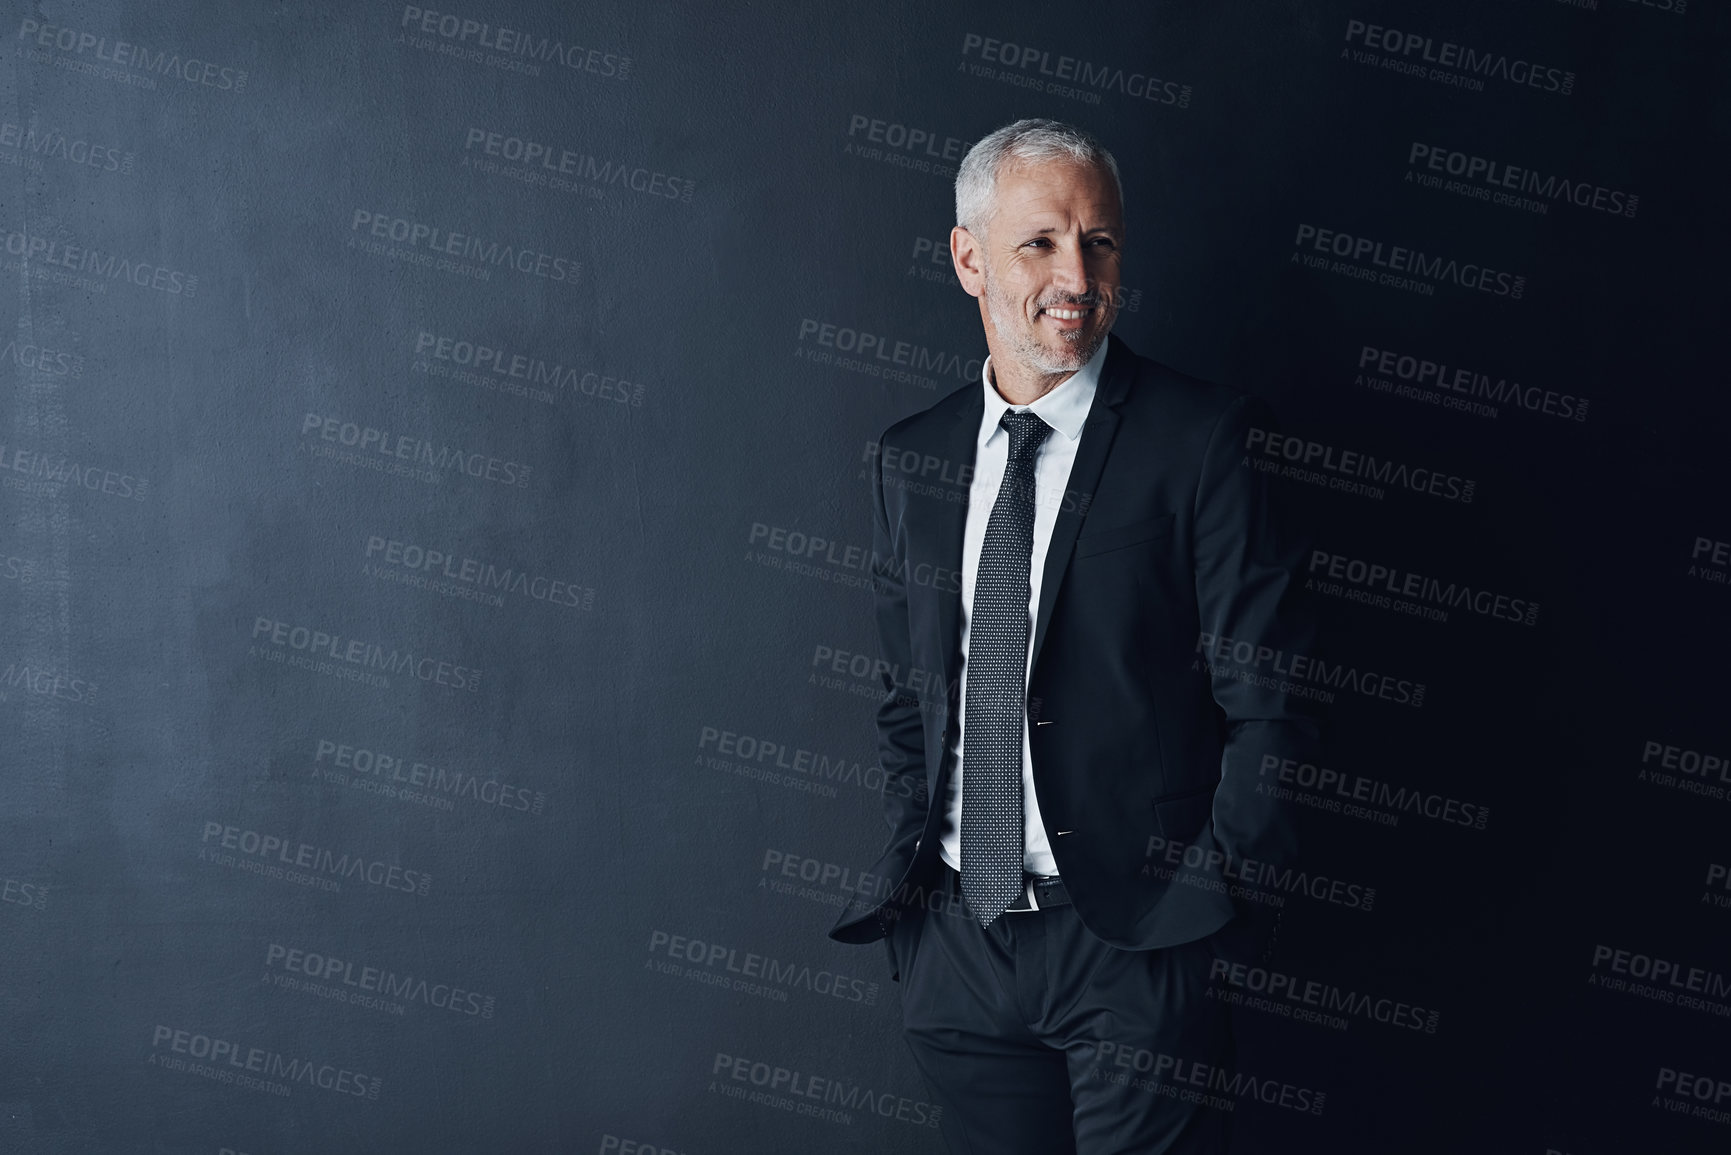 Buy stock photo Studio shot of a mature businessman against a dark background